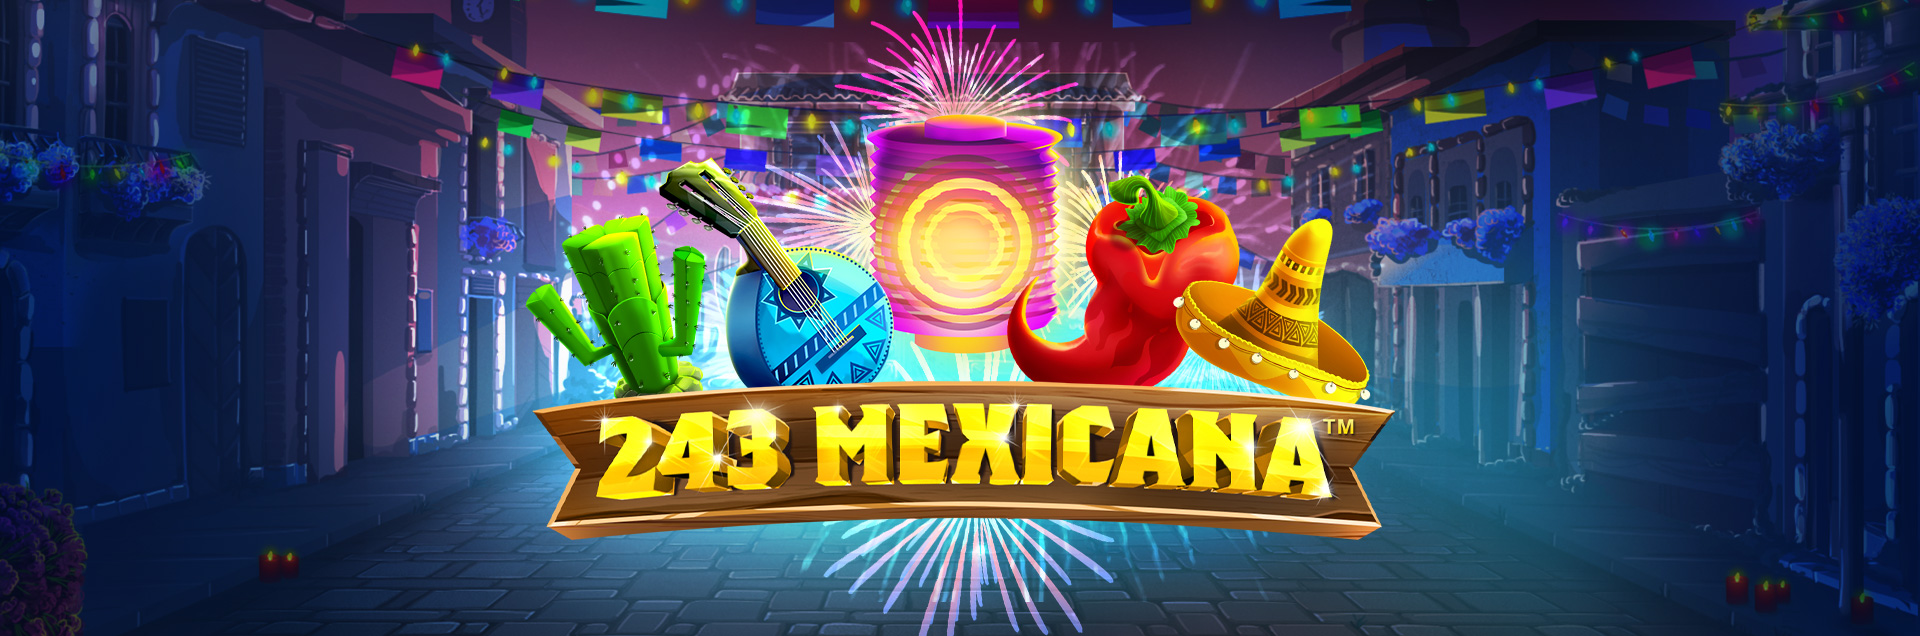 243 Mexicana header games